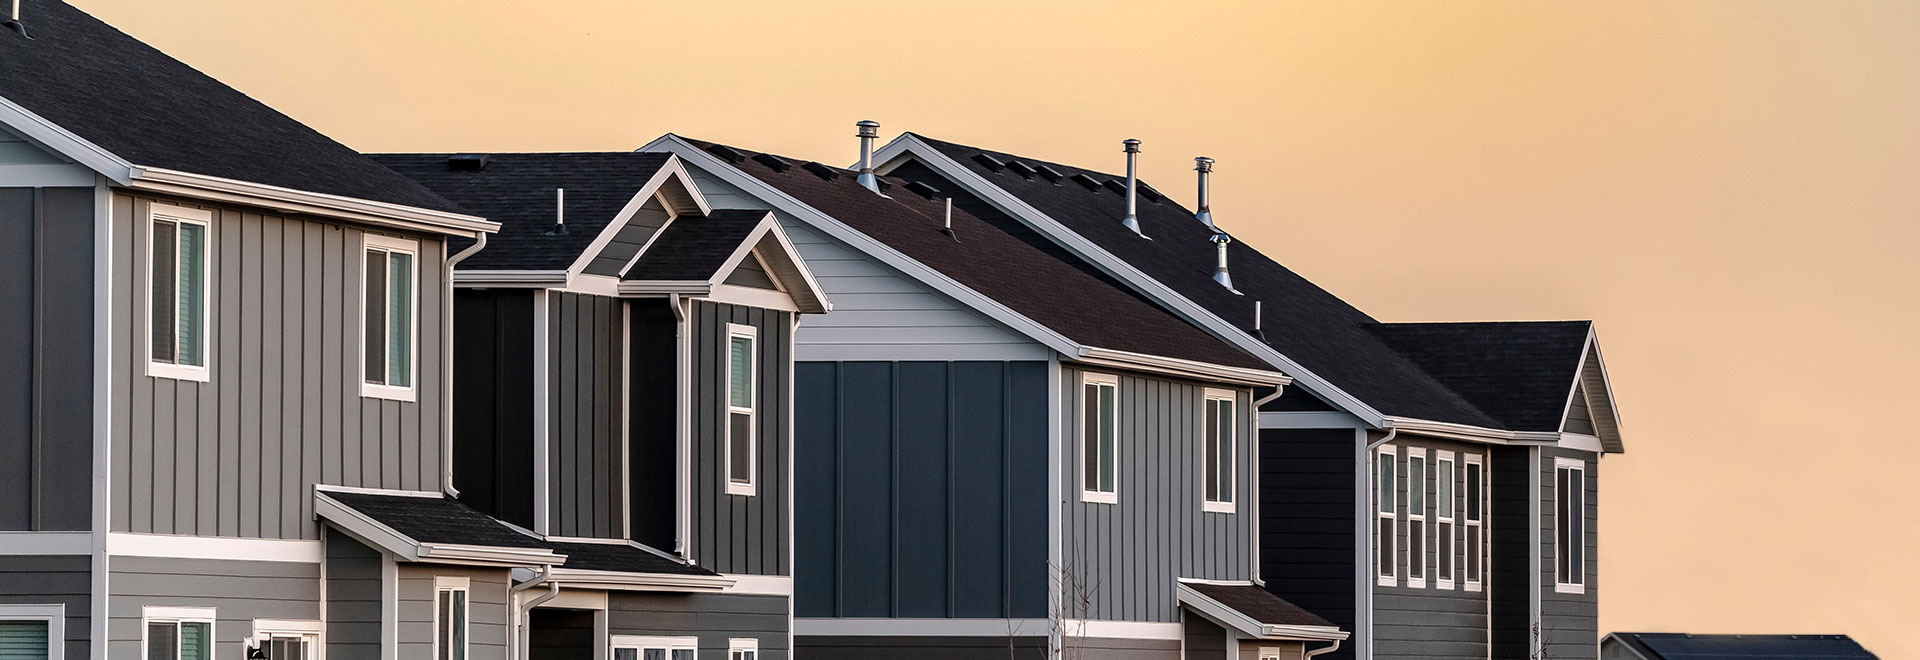 residential-roofing-siding-doors-windows-builder.jpg